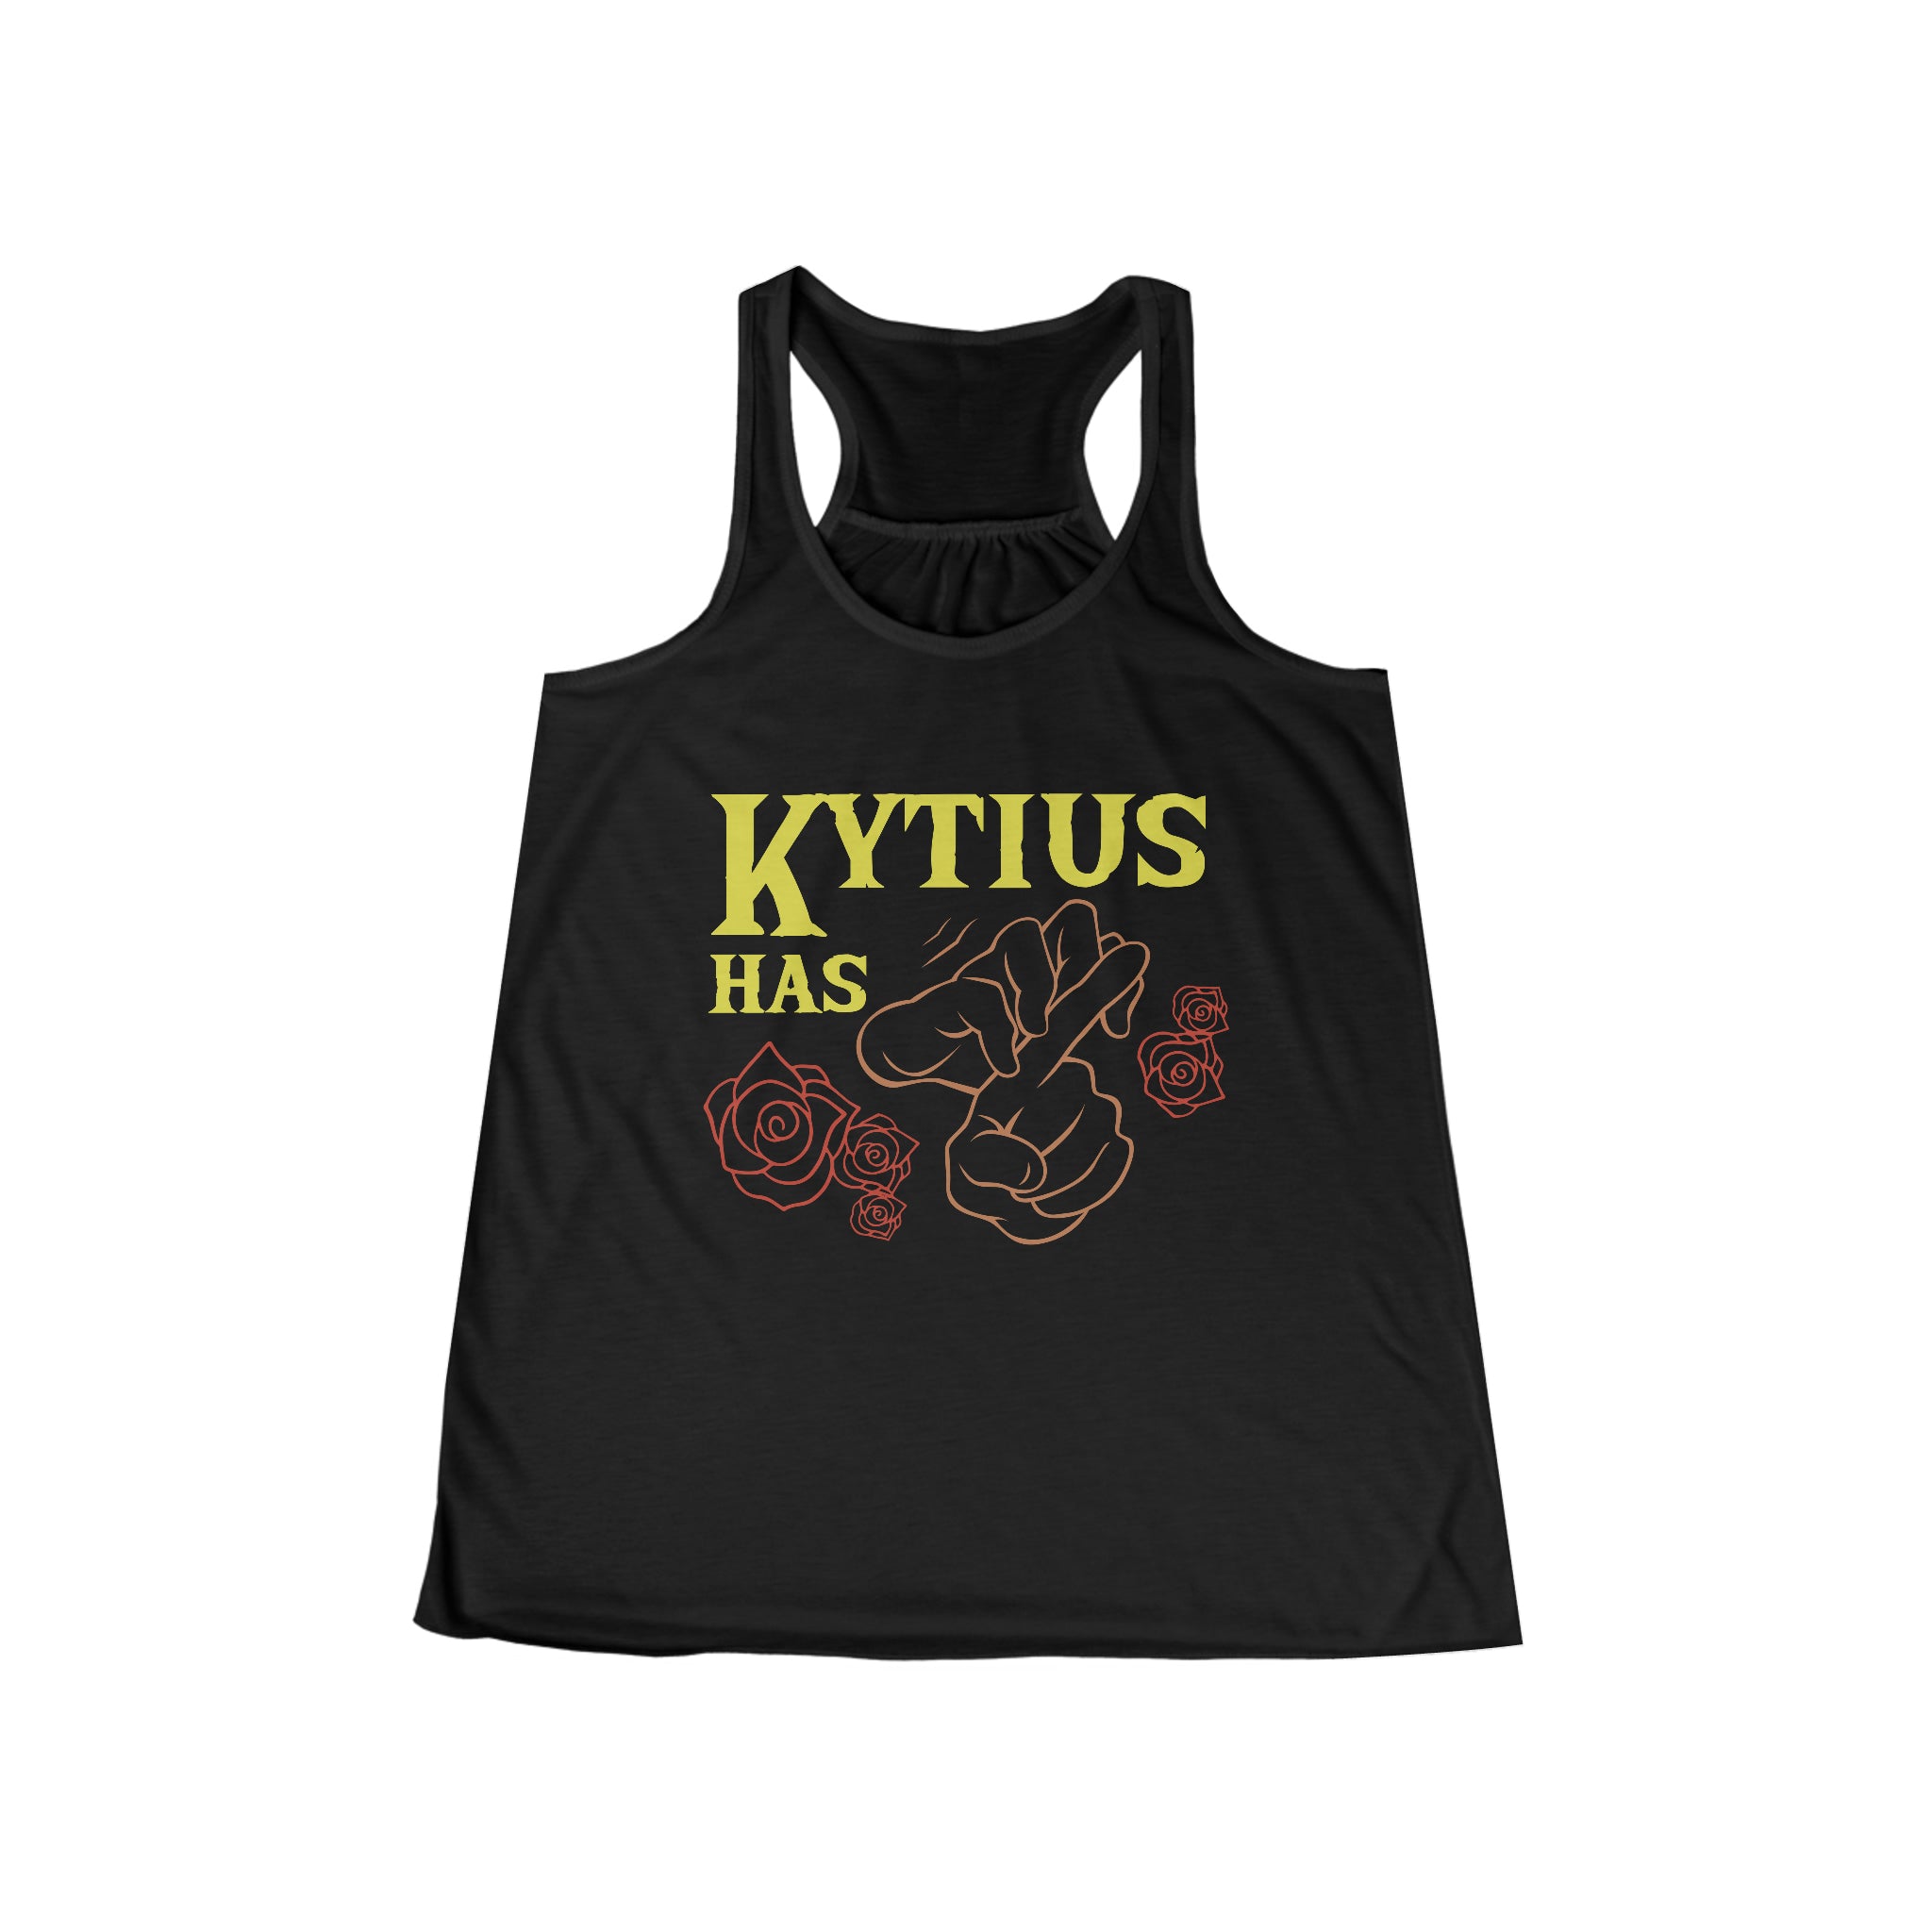 'Kytius has Herpes' Women's Tank Top